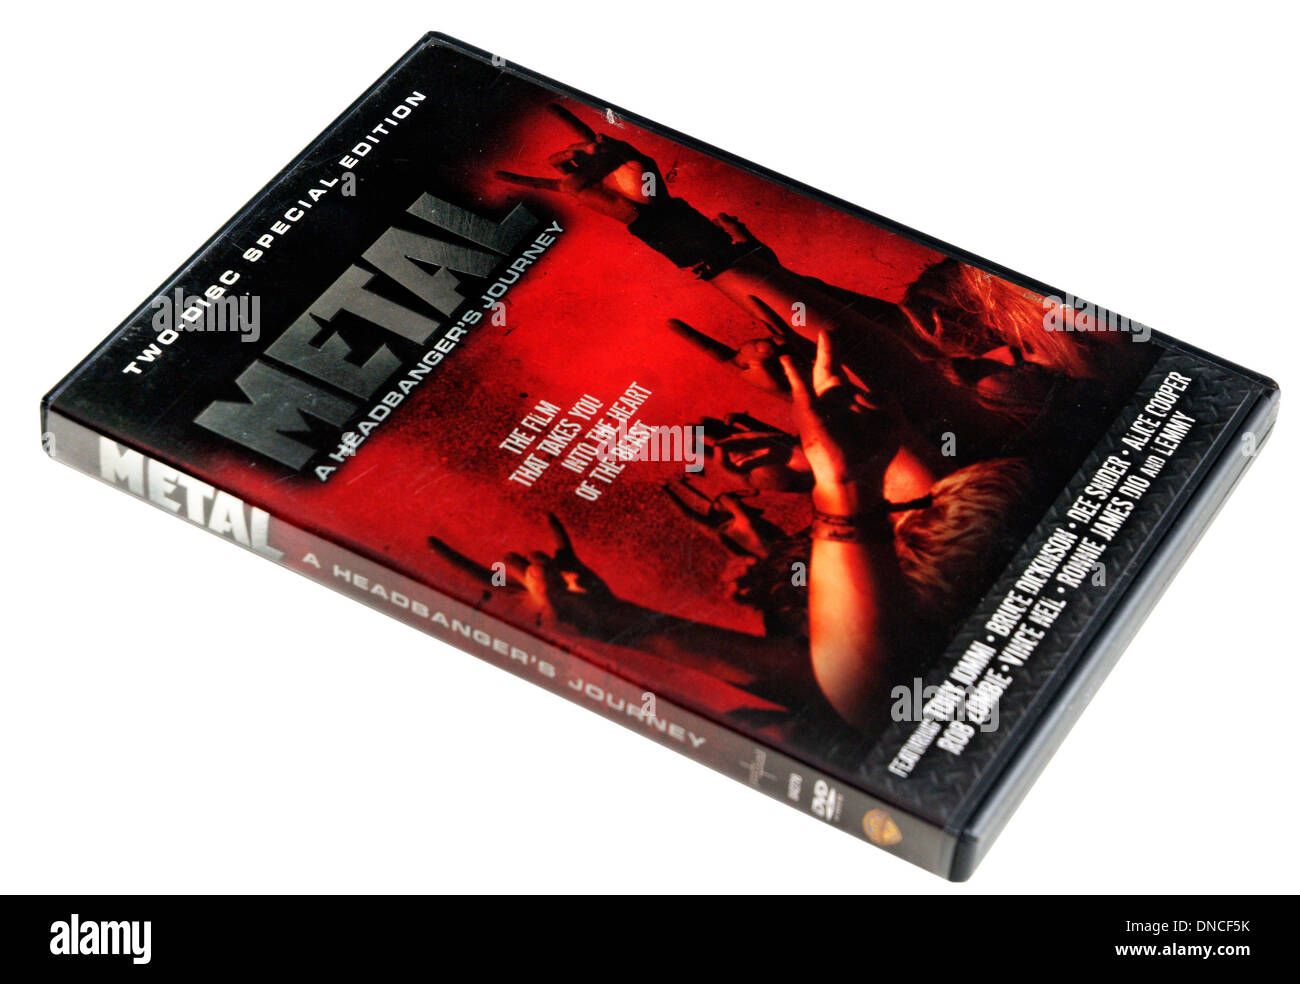 Metal A Headbangers Journey DVD Stock Photo